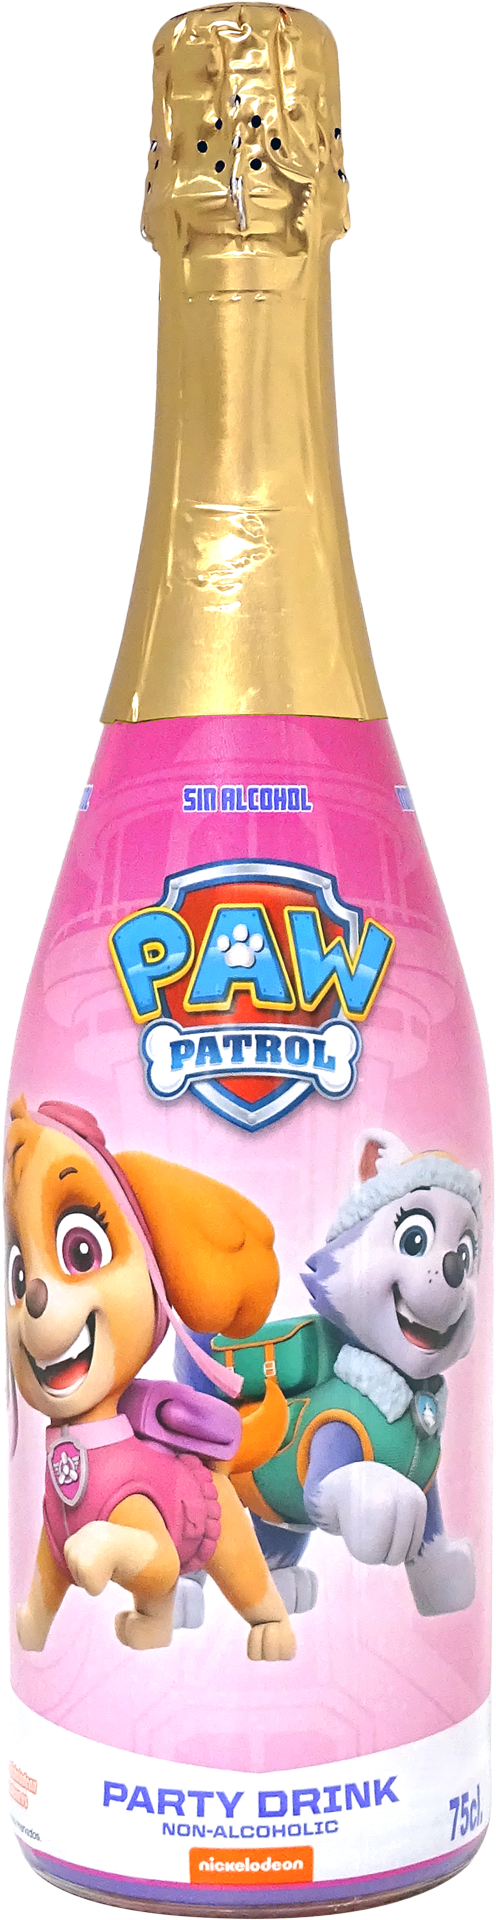 PAW PATROL GIRL